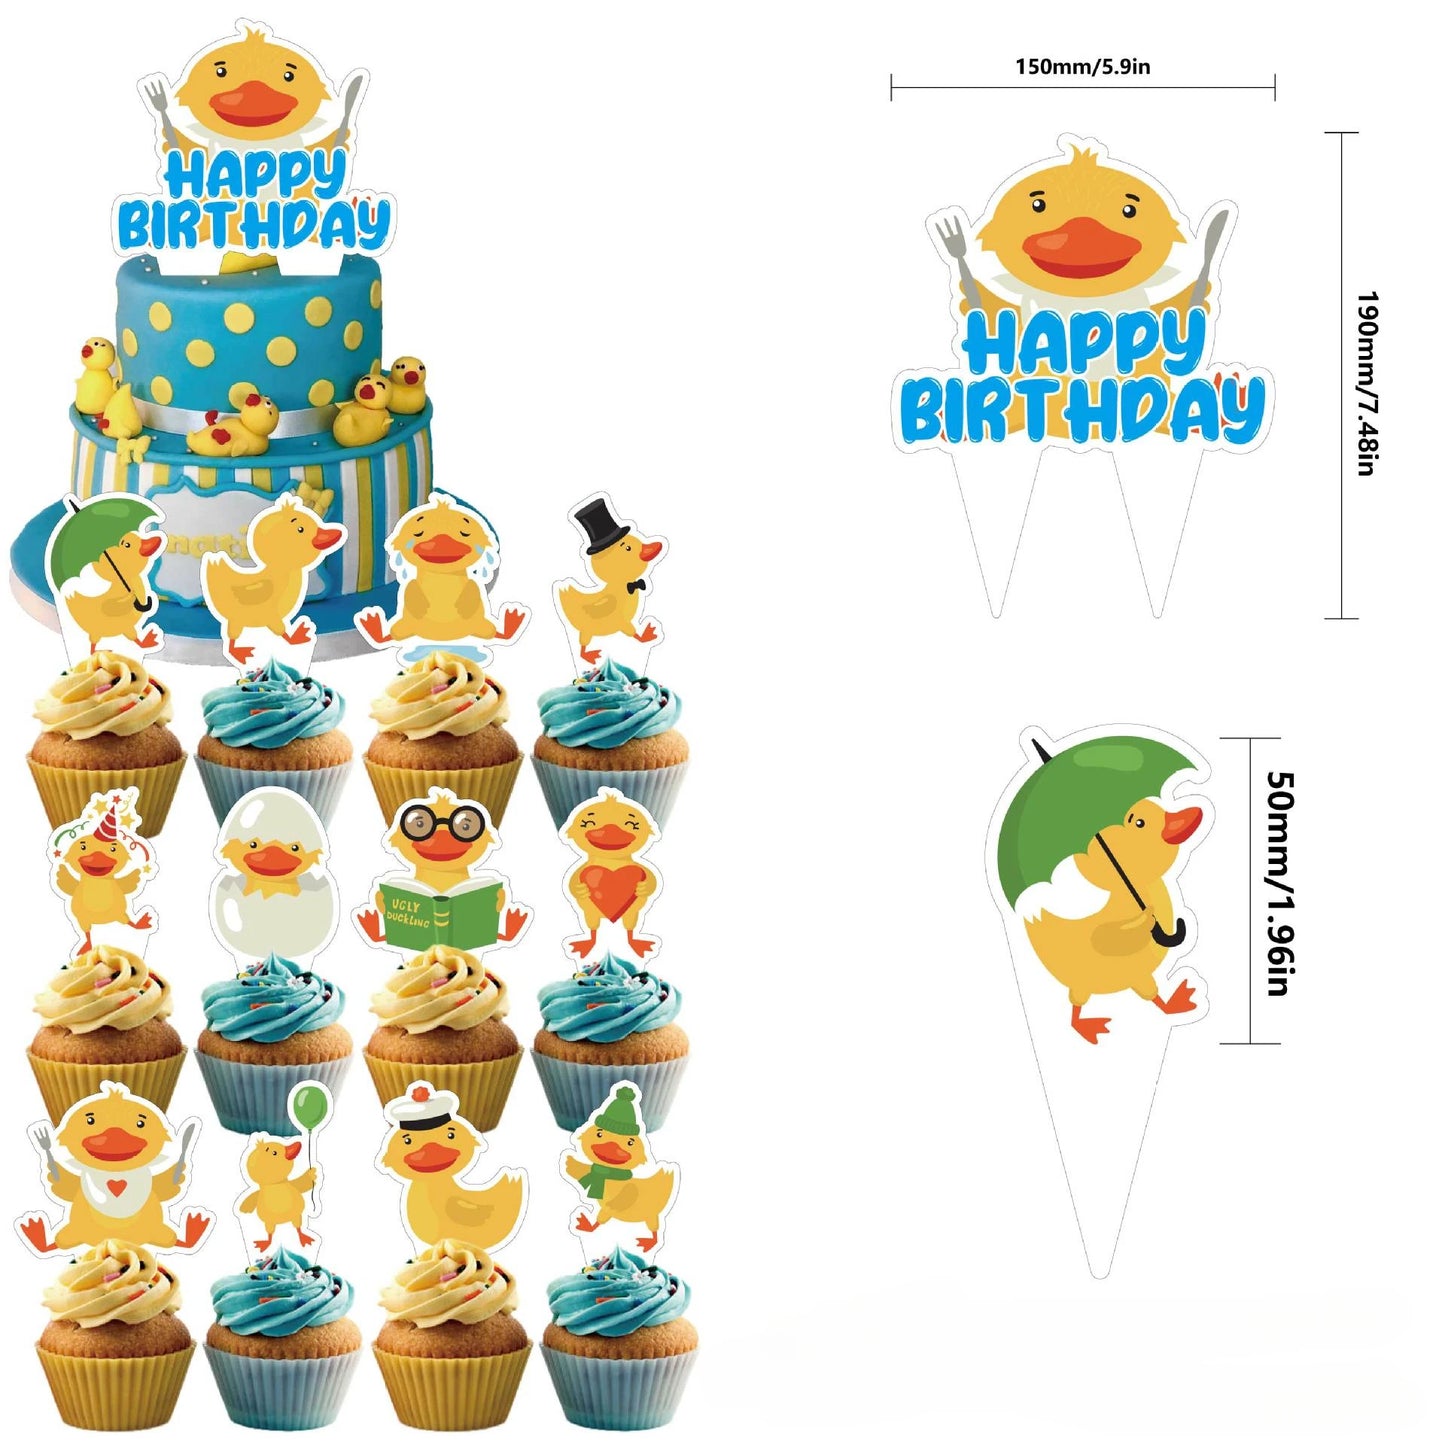 Yellow Duck Theme Birthday Decorations Set Cute Duck Balloon Cake Topper Birthday Banner Little Yellow Duck Birthday Party Decor